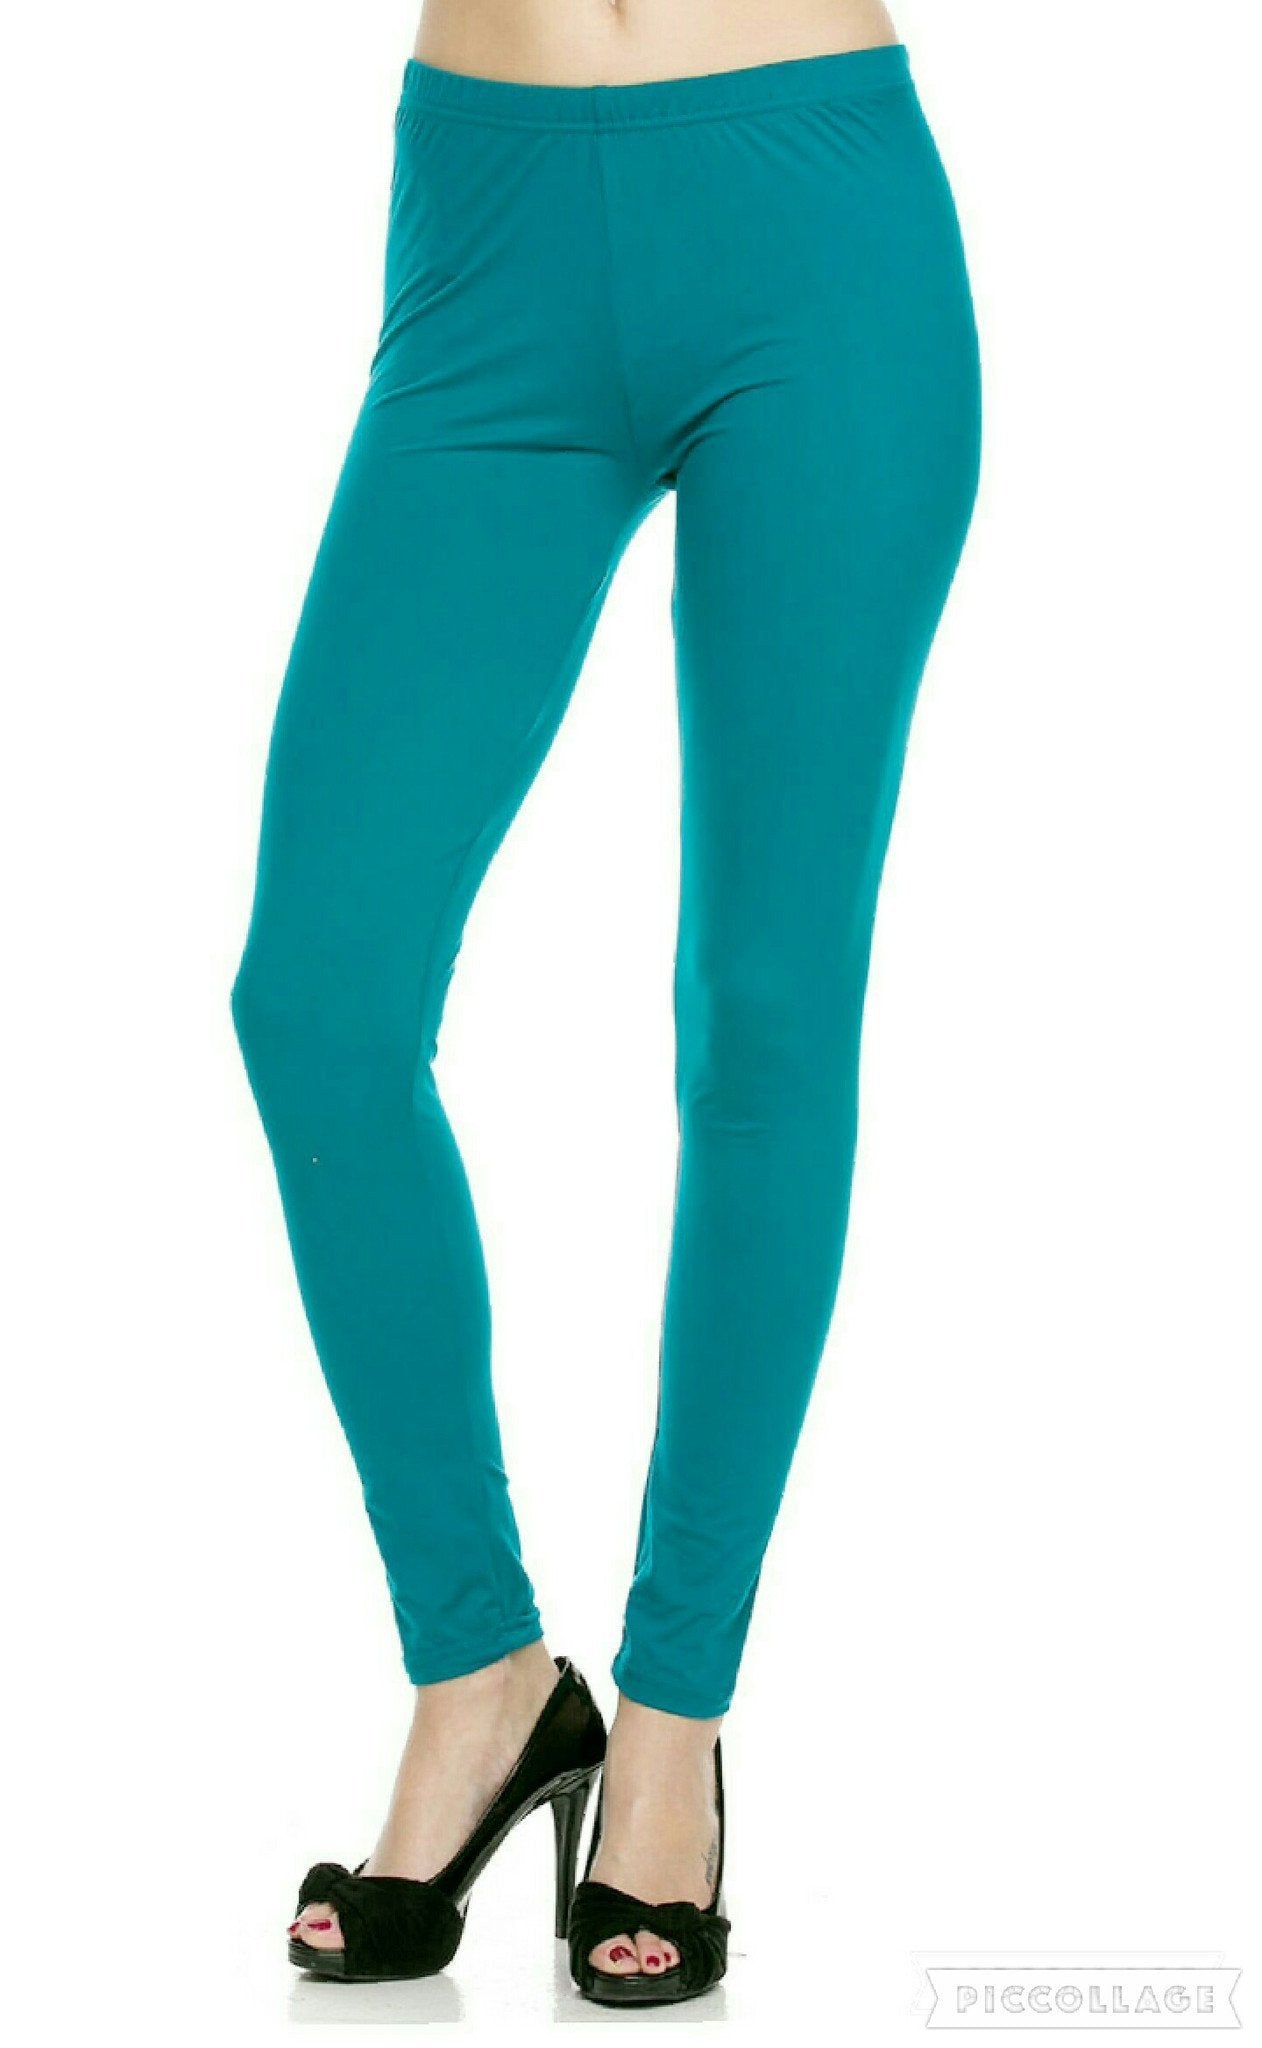 shefit leggings in turquoise - Gem